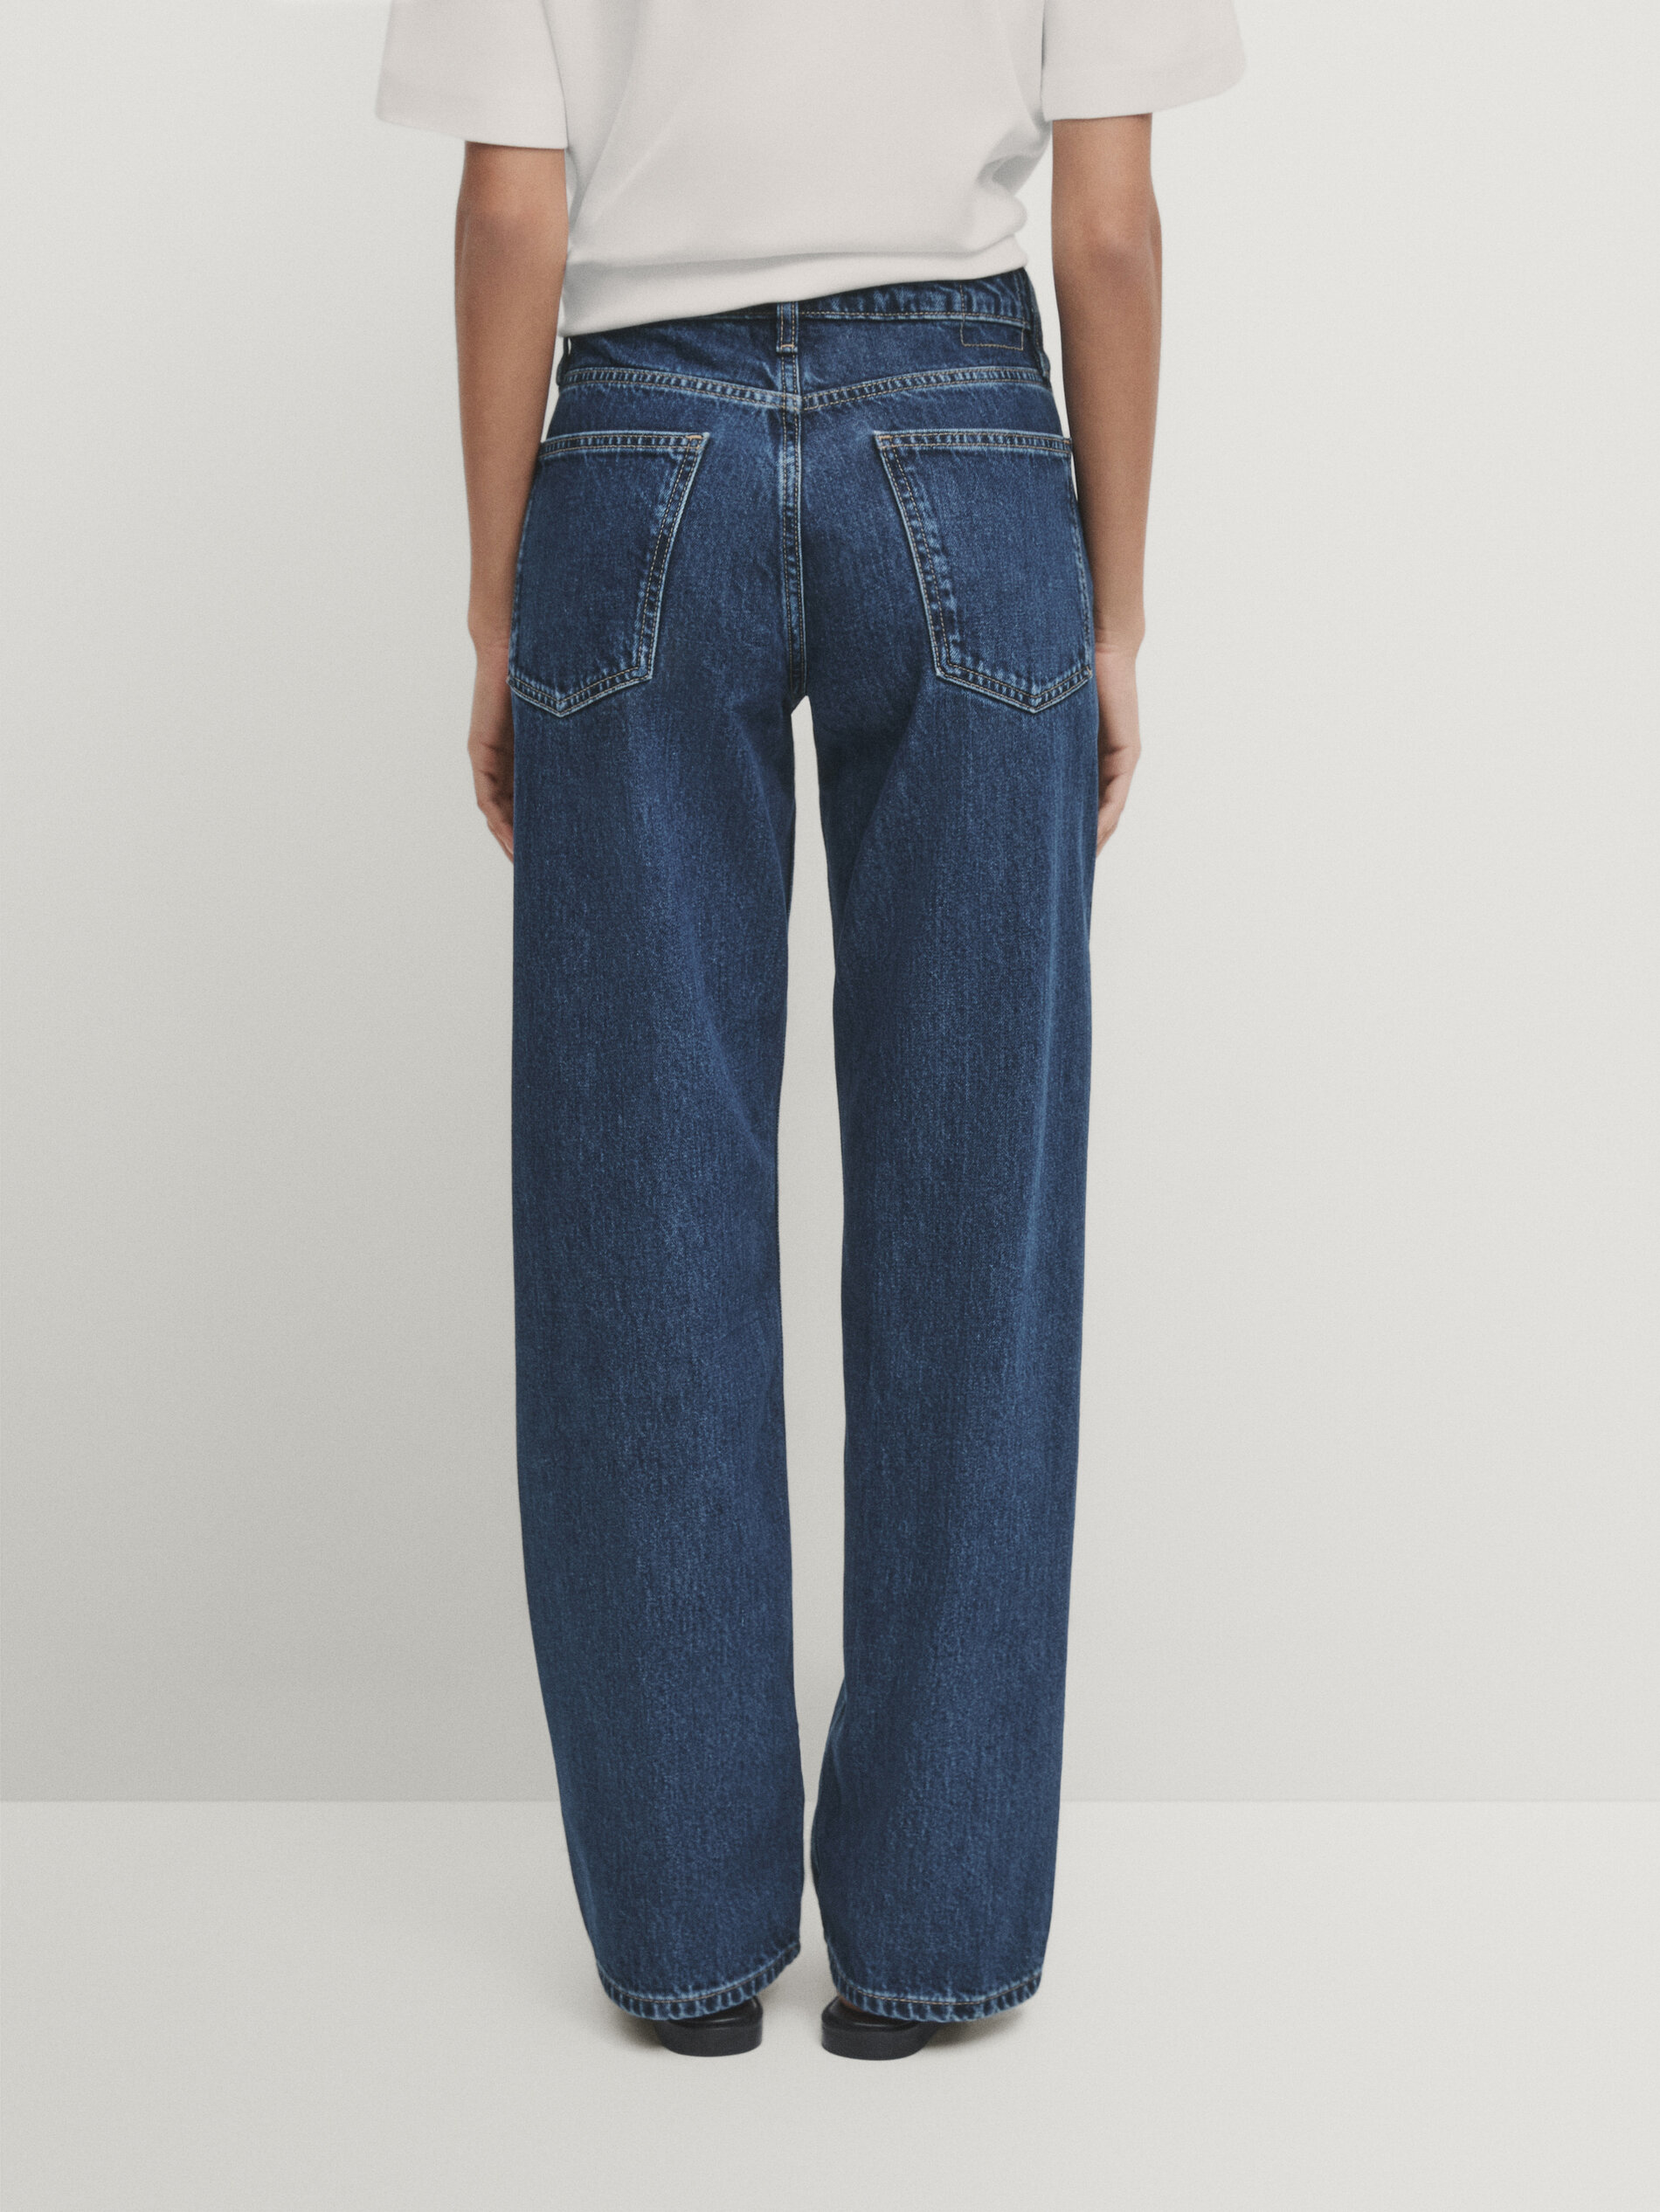 Jeans tiro bajo straight fit regular length